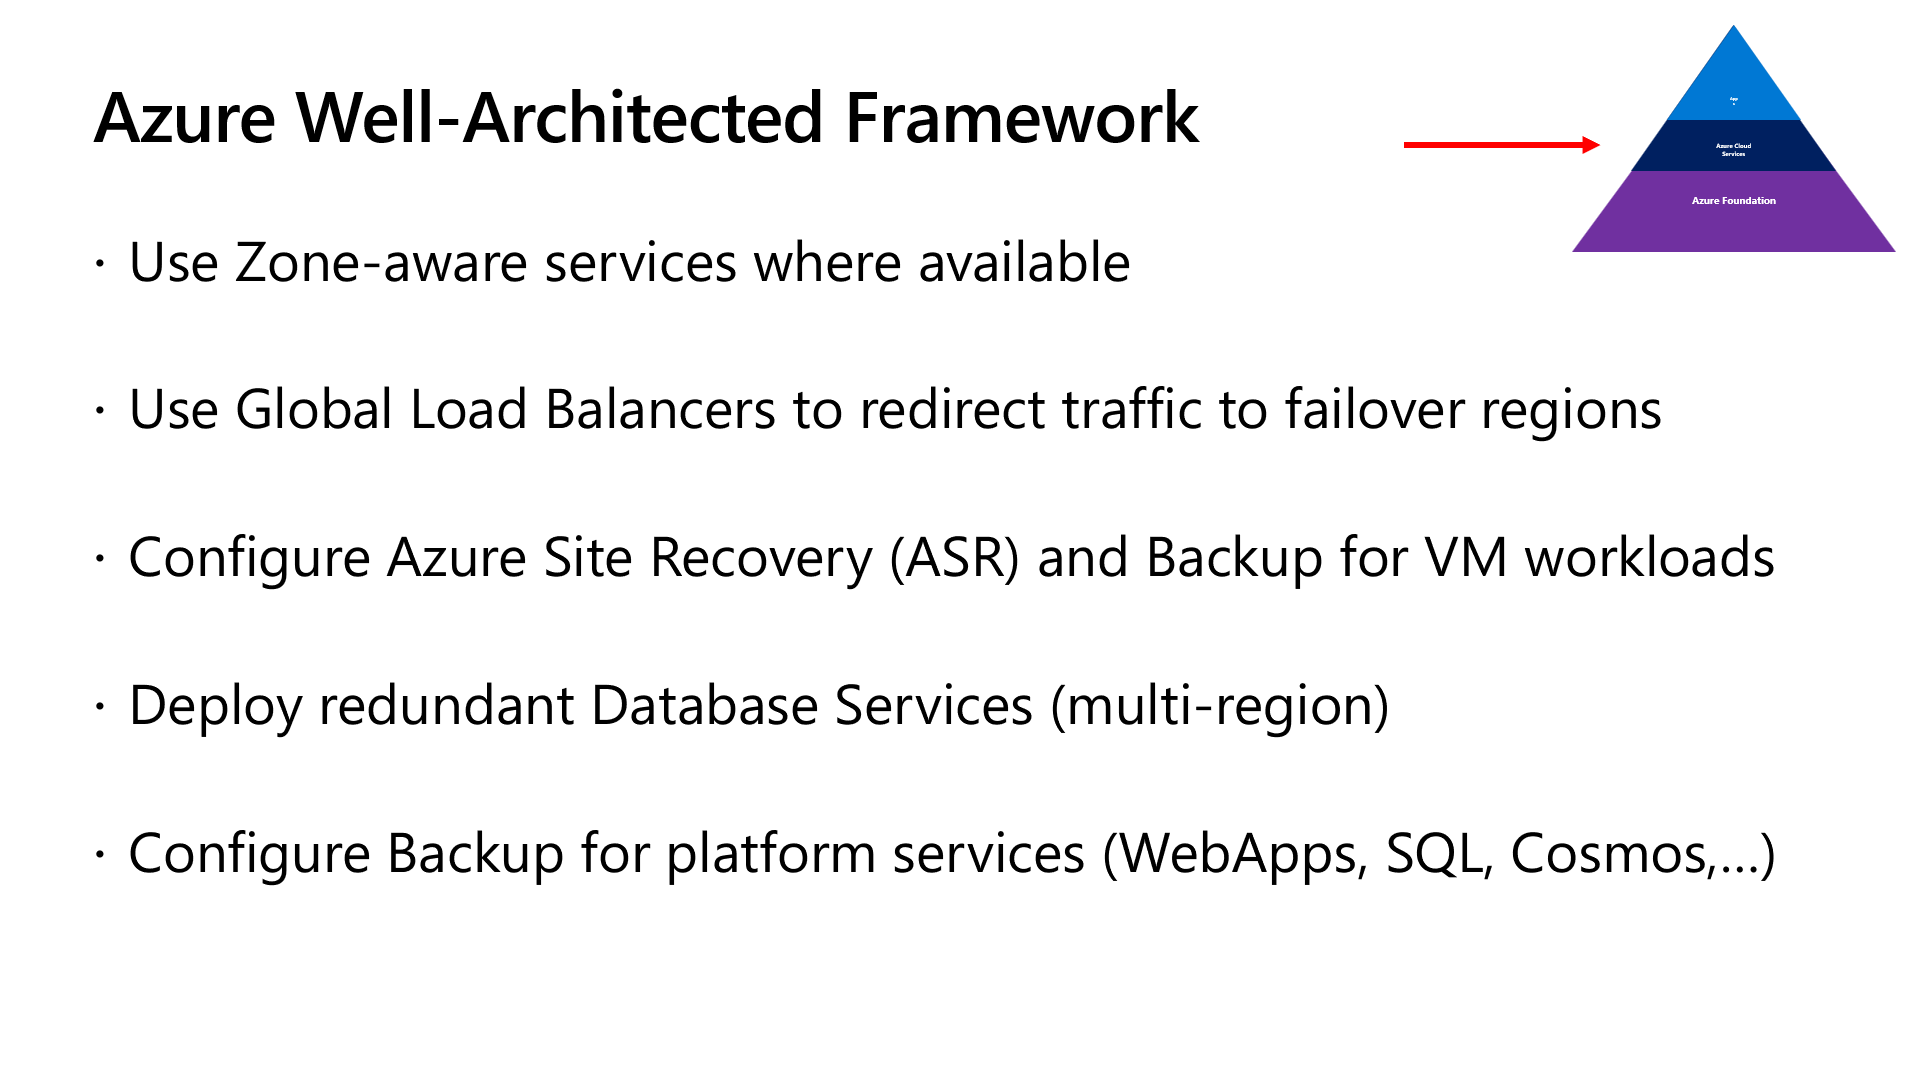 Azure Well-Architected Framework Overview